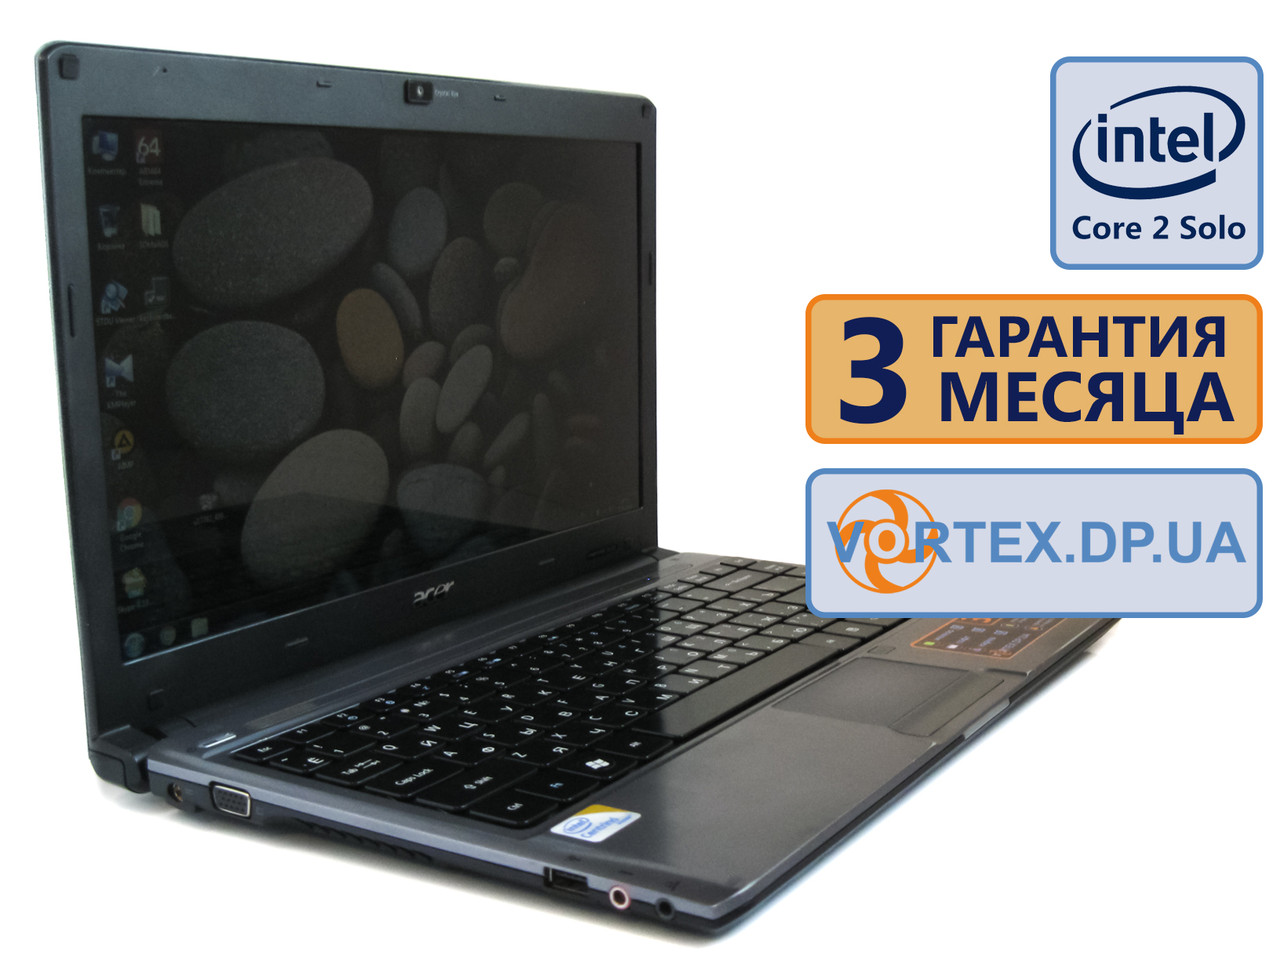 Уценка! Ноутбук Acer Aspire 3810T 13.3 (1366x768) / Intel Core 2 Solo 